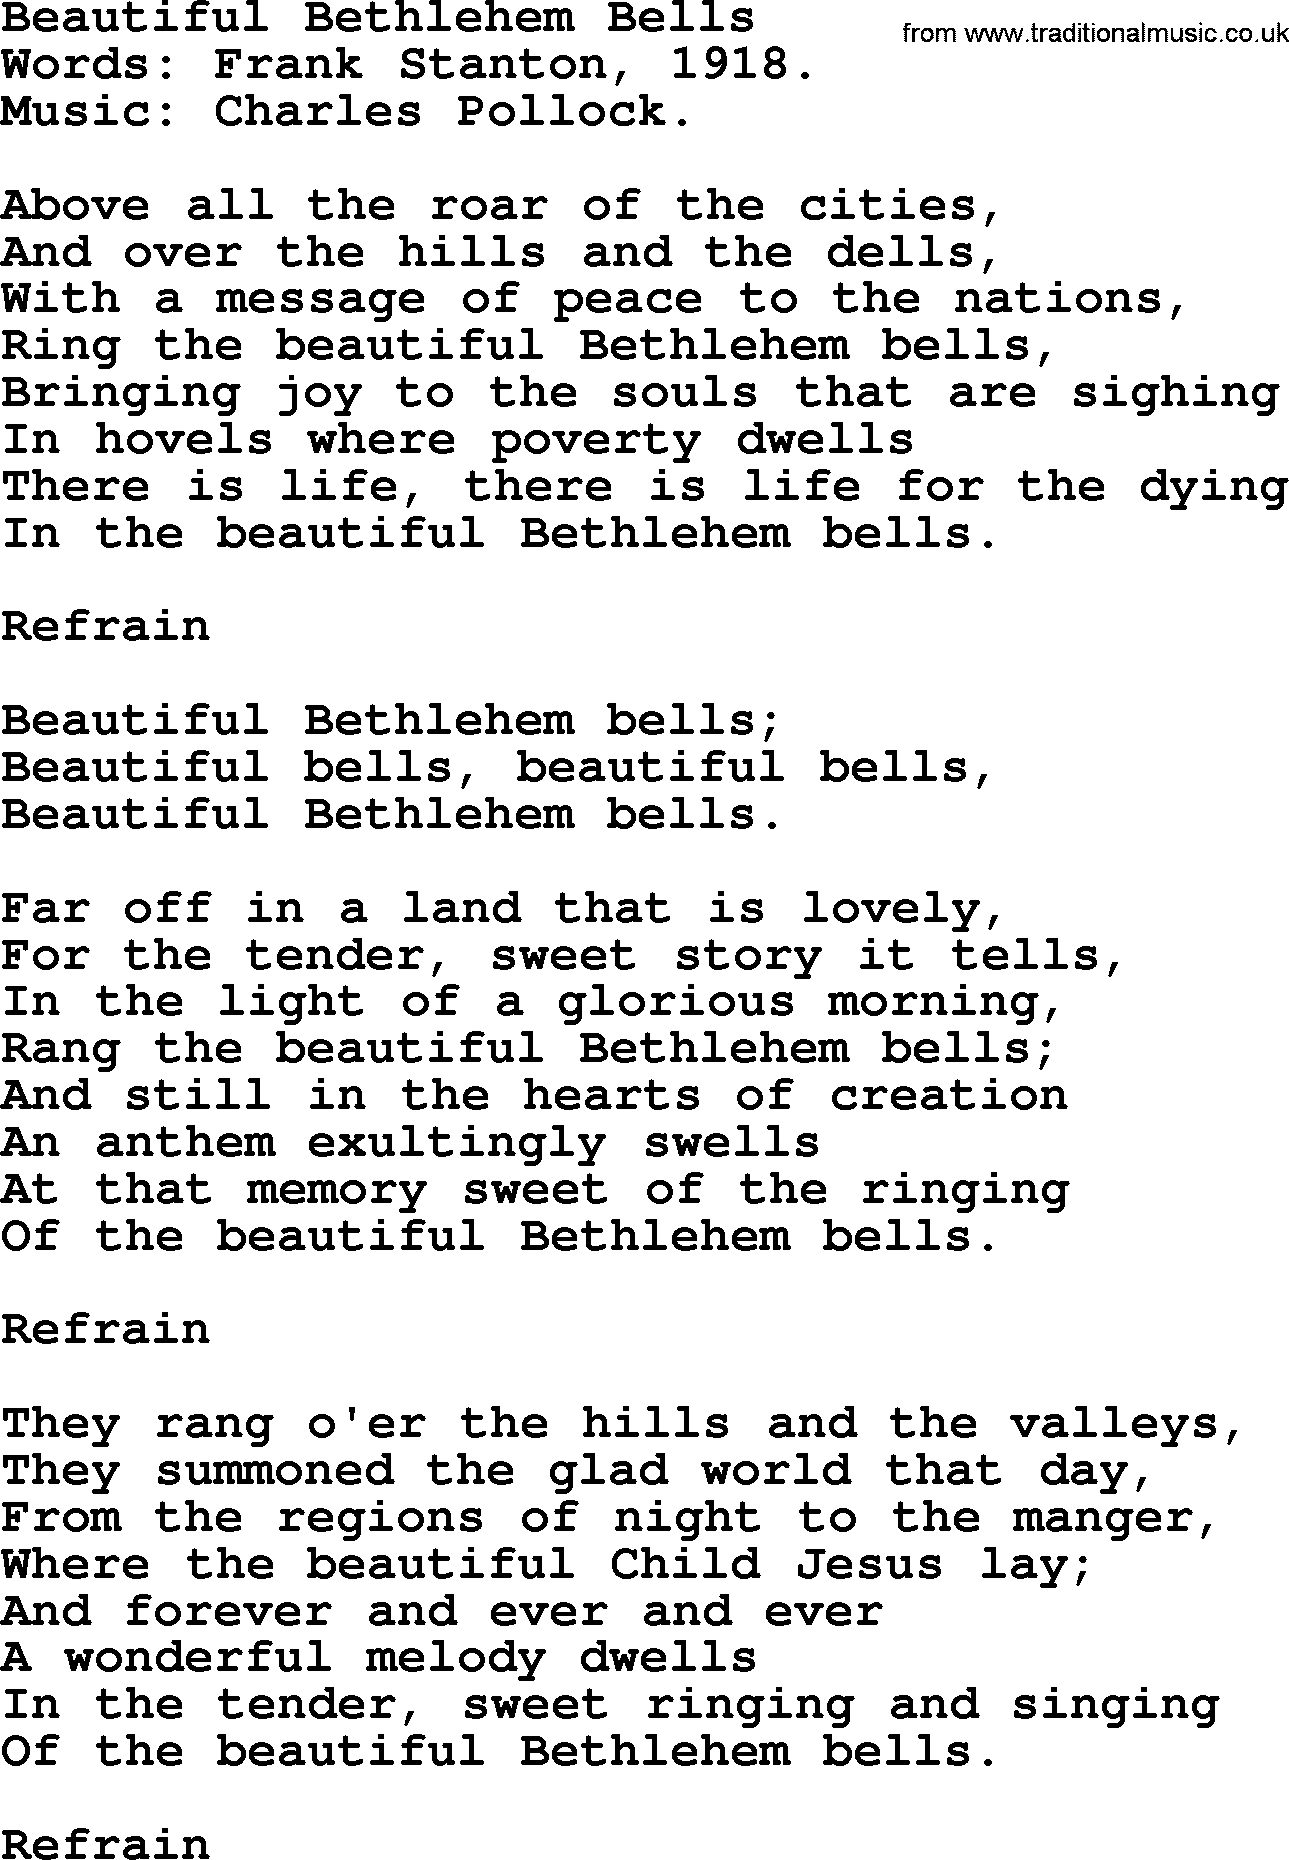 Christmas Hymns, Carols and Songs, title: Beautiful Bethlehem Bells, lyrics with PDF